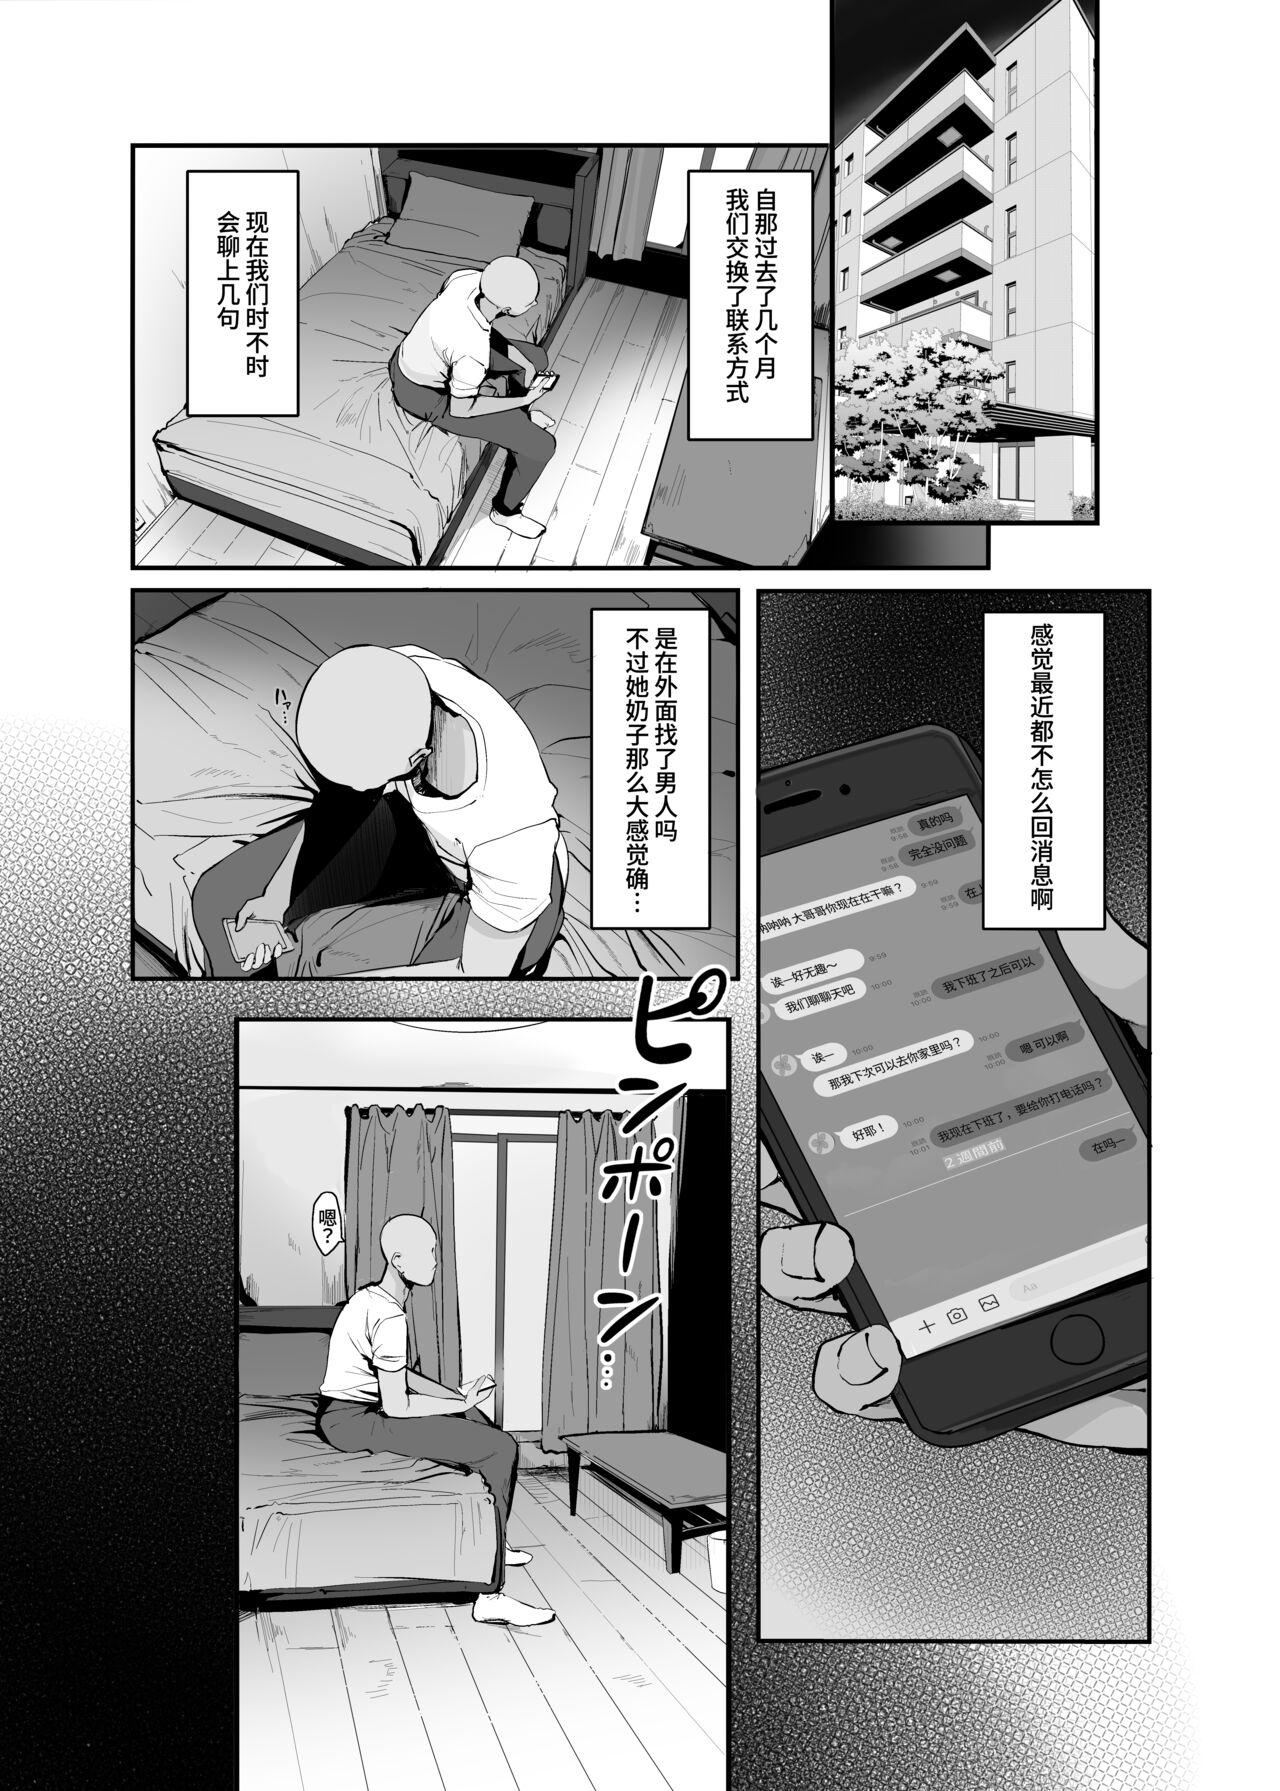 Curious Kyou, Tomete Kuremasen ka? - Can you stay overtoday? - Original Morrita - Page 5